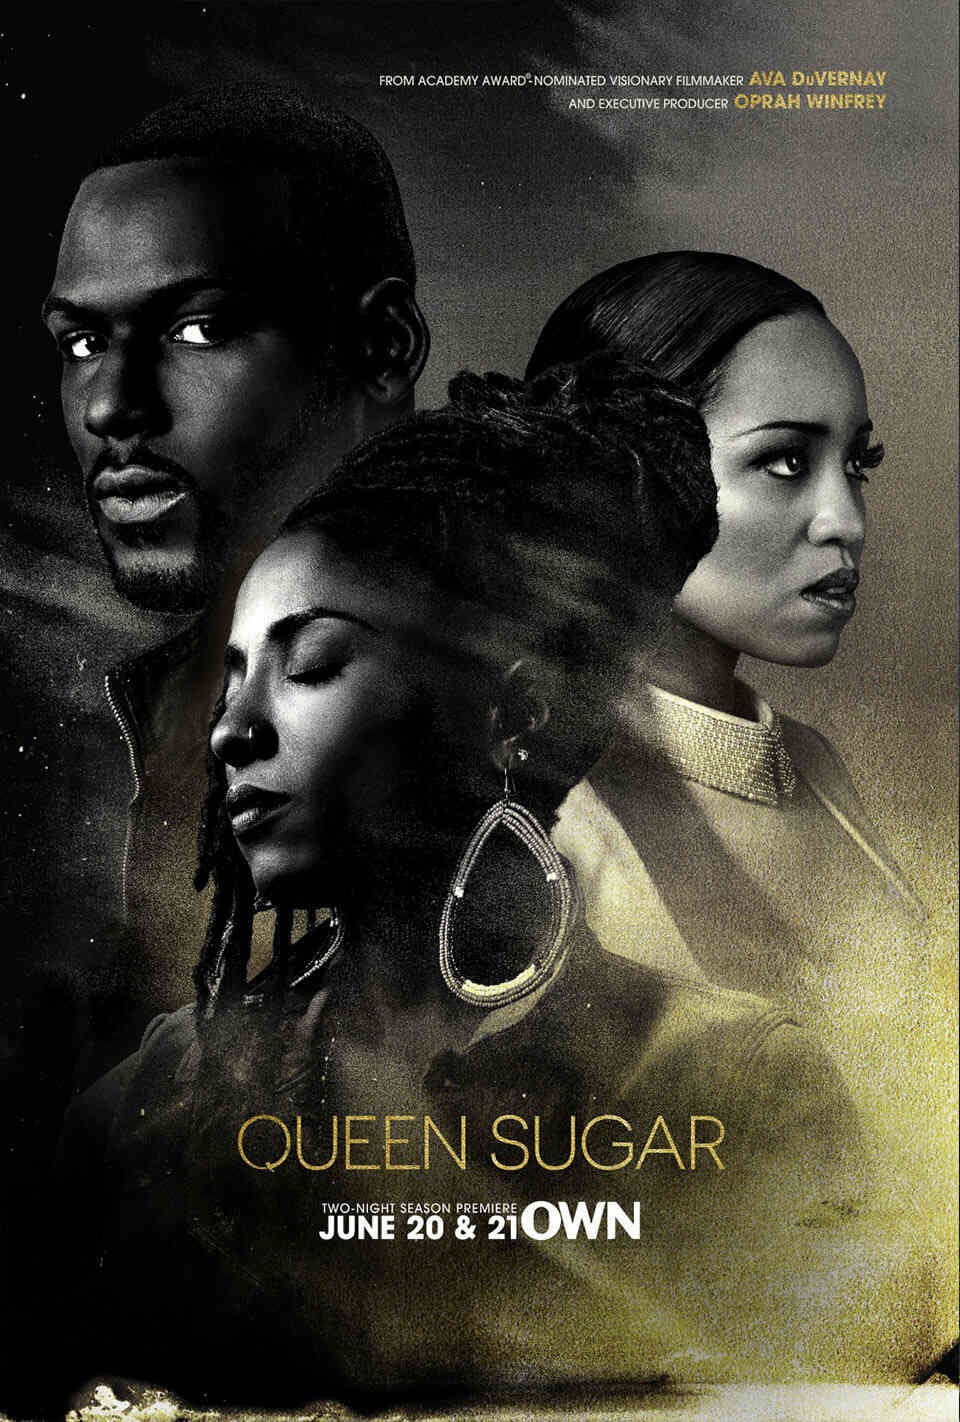 Read Queen Sugar screenplay.